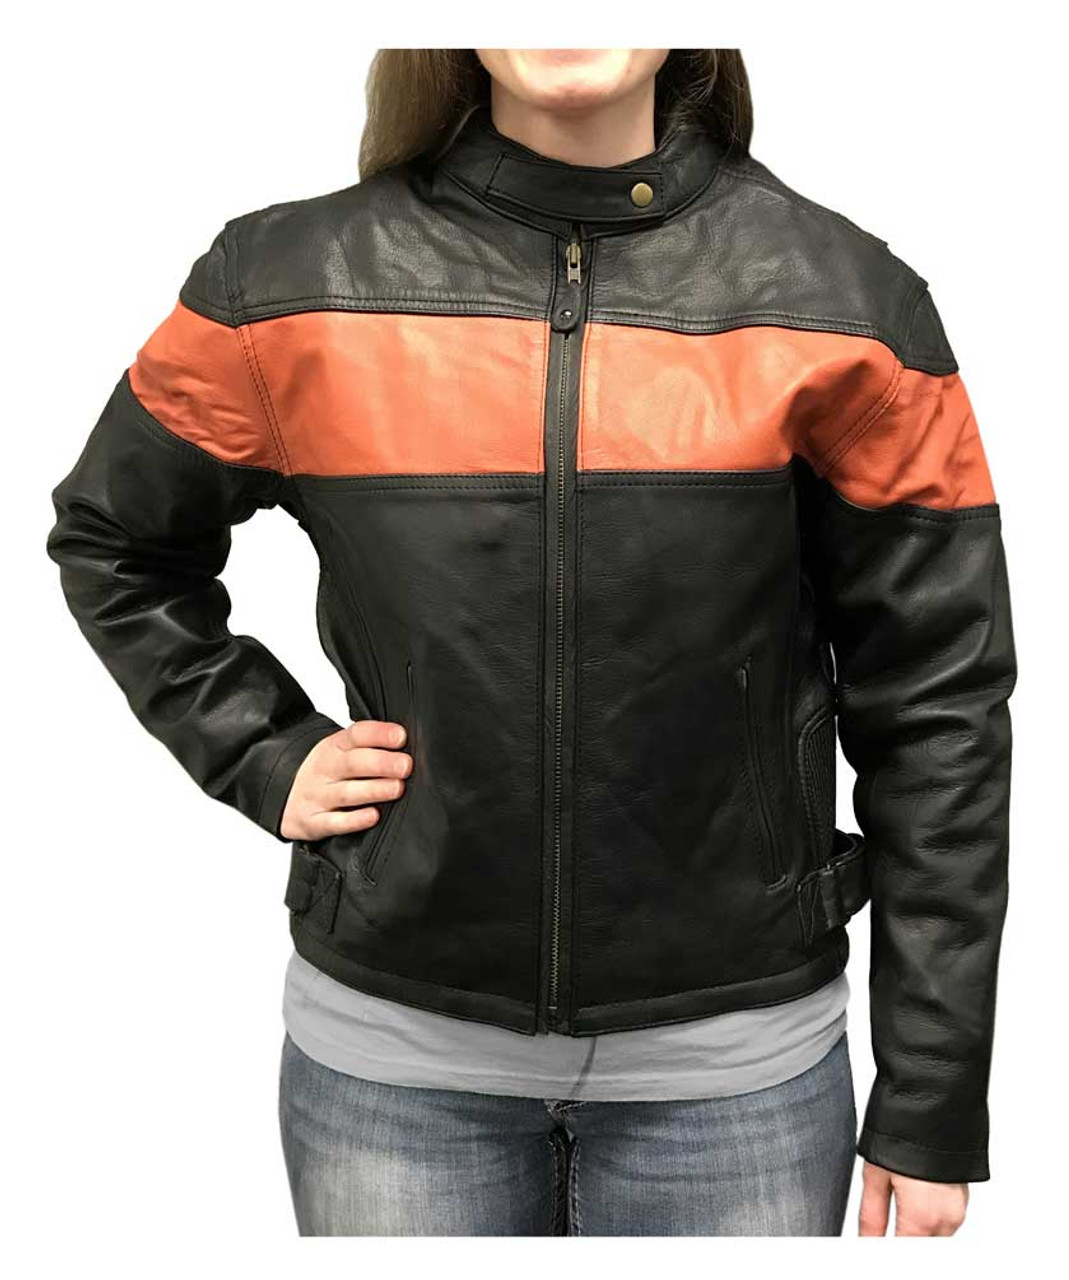 LUCKY STRIKE New Black/Orange Leather Biker Motorcycle Jacket All sizes! 